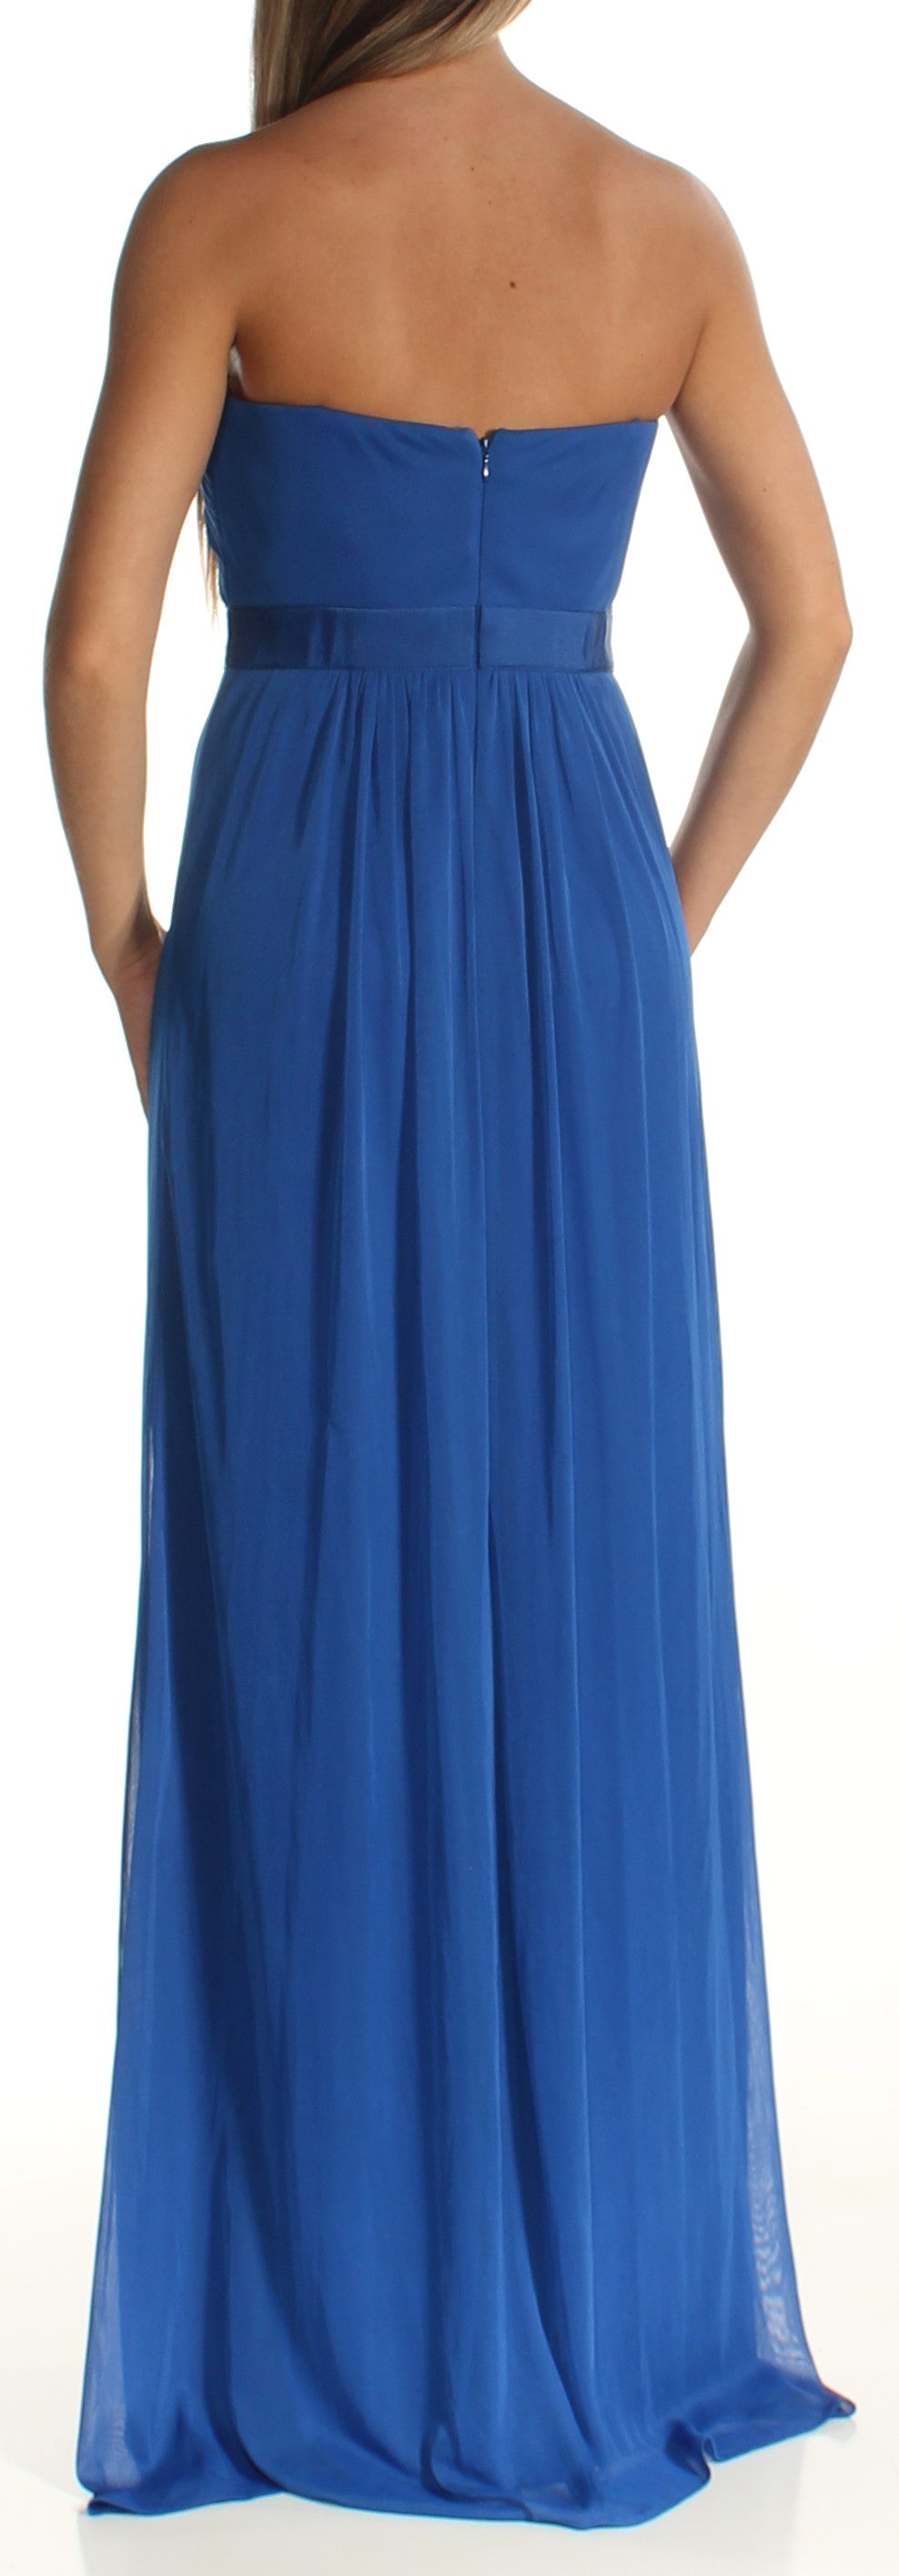 ADRIANNA PAPELL Womens Blue Embellished Sleeveless Strapless Full-Length Prom Sheath Dress